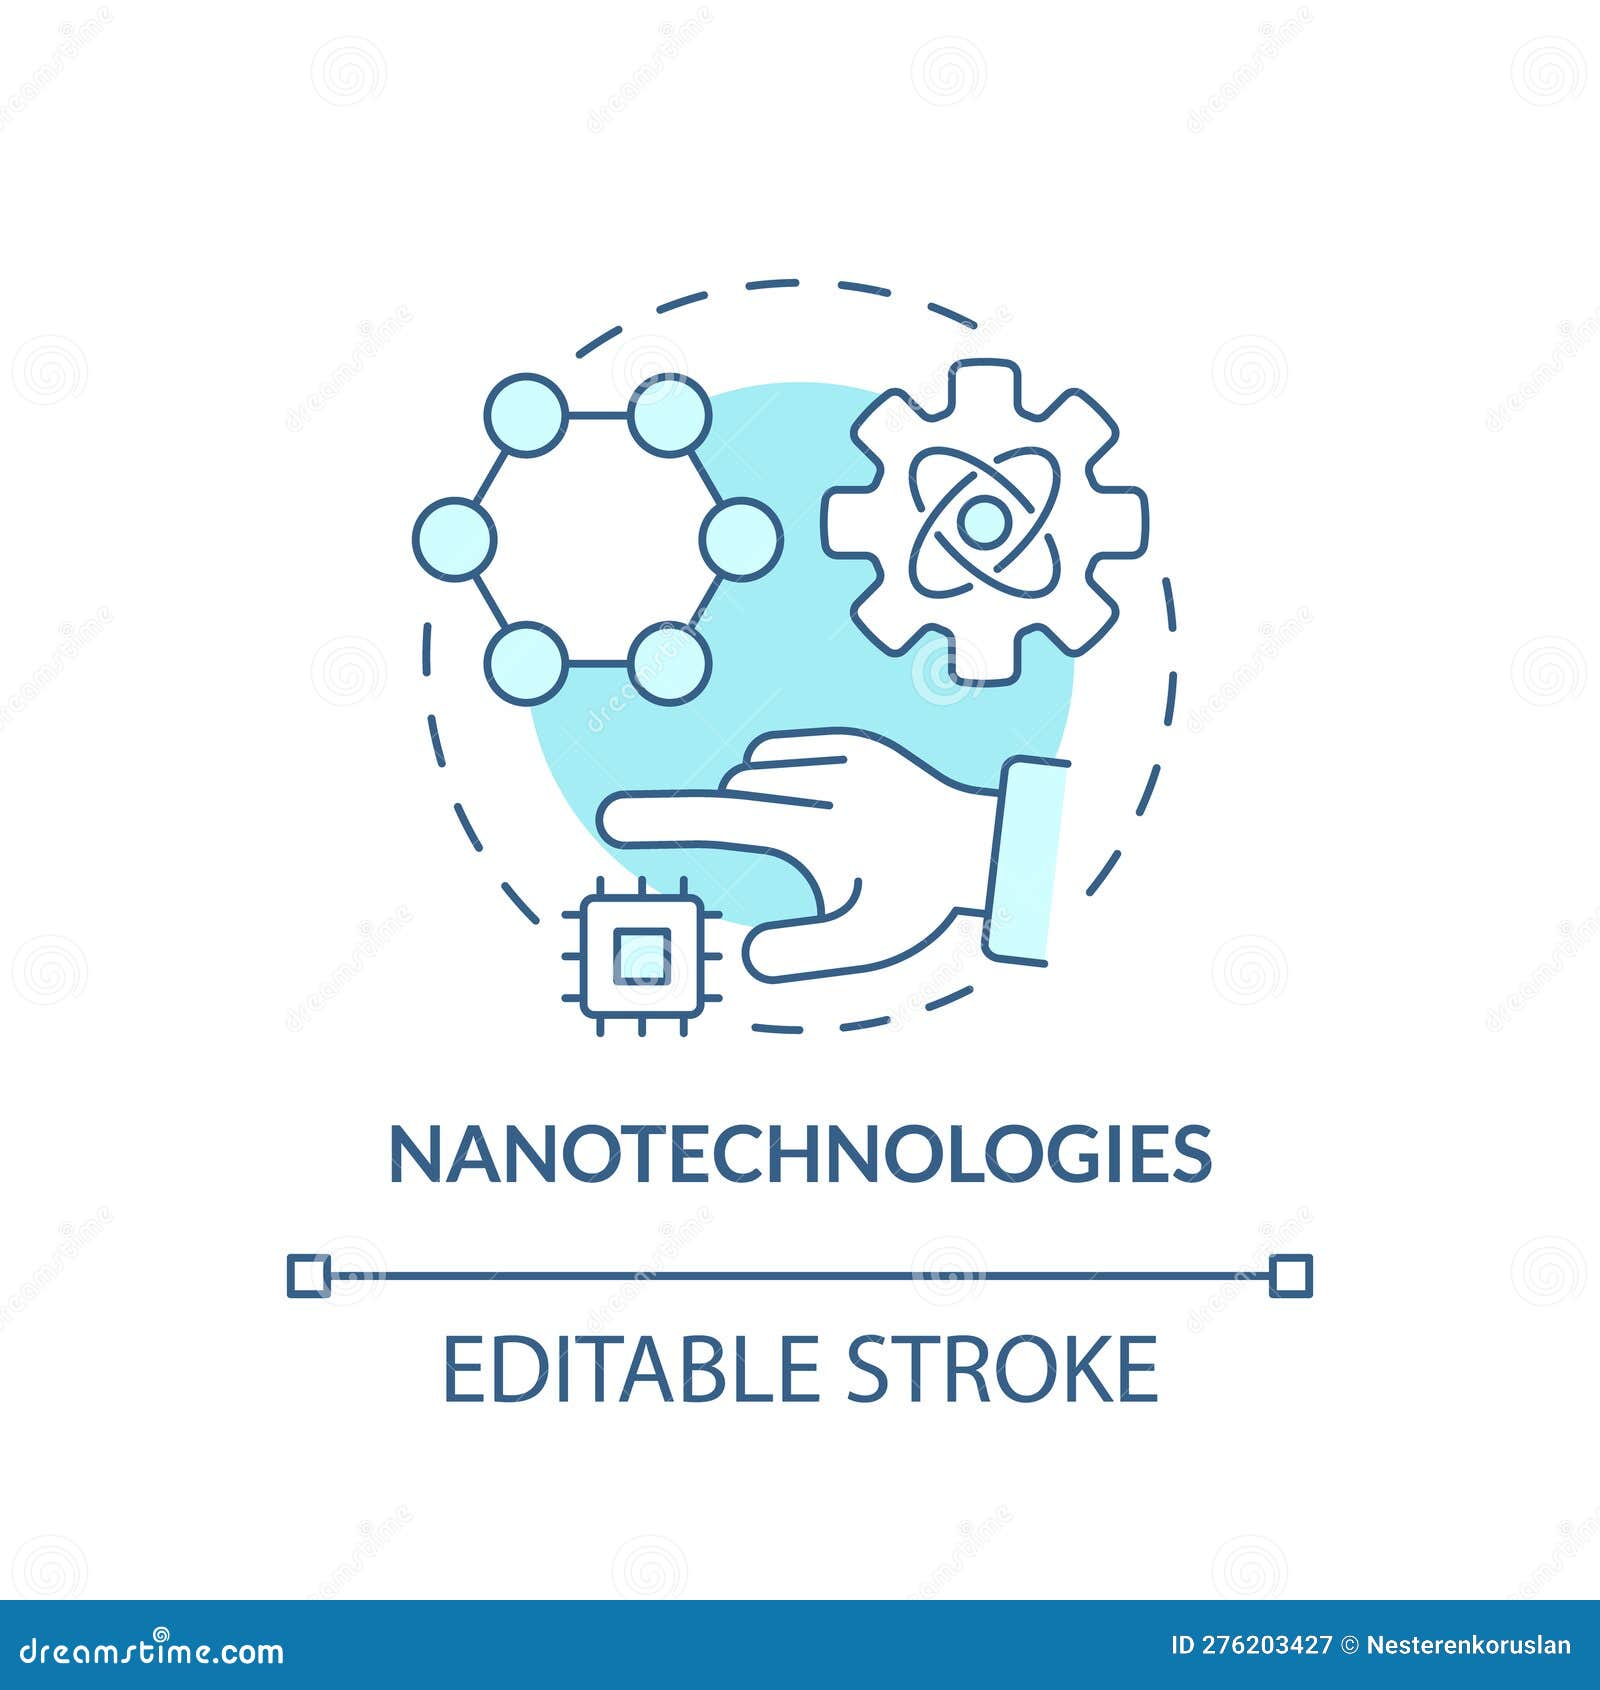 nanotechnologies turquoise concept icon